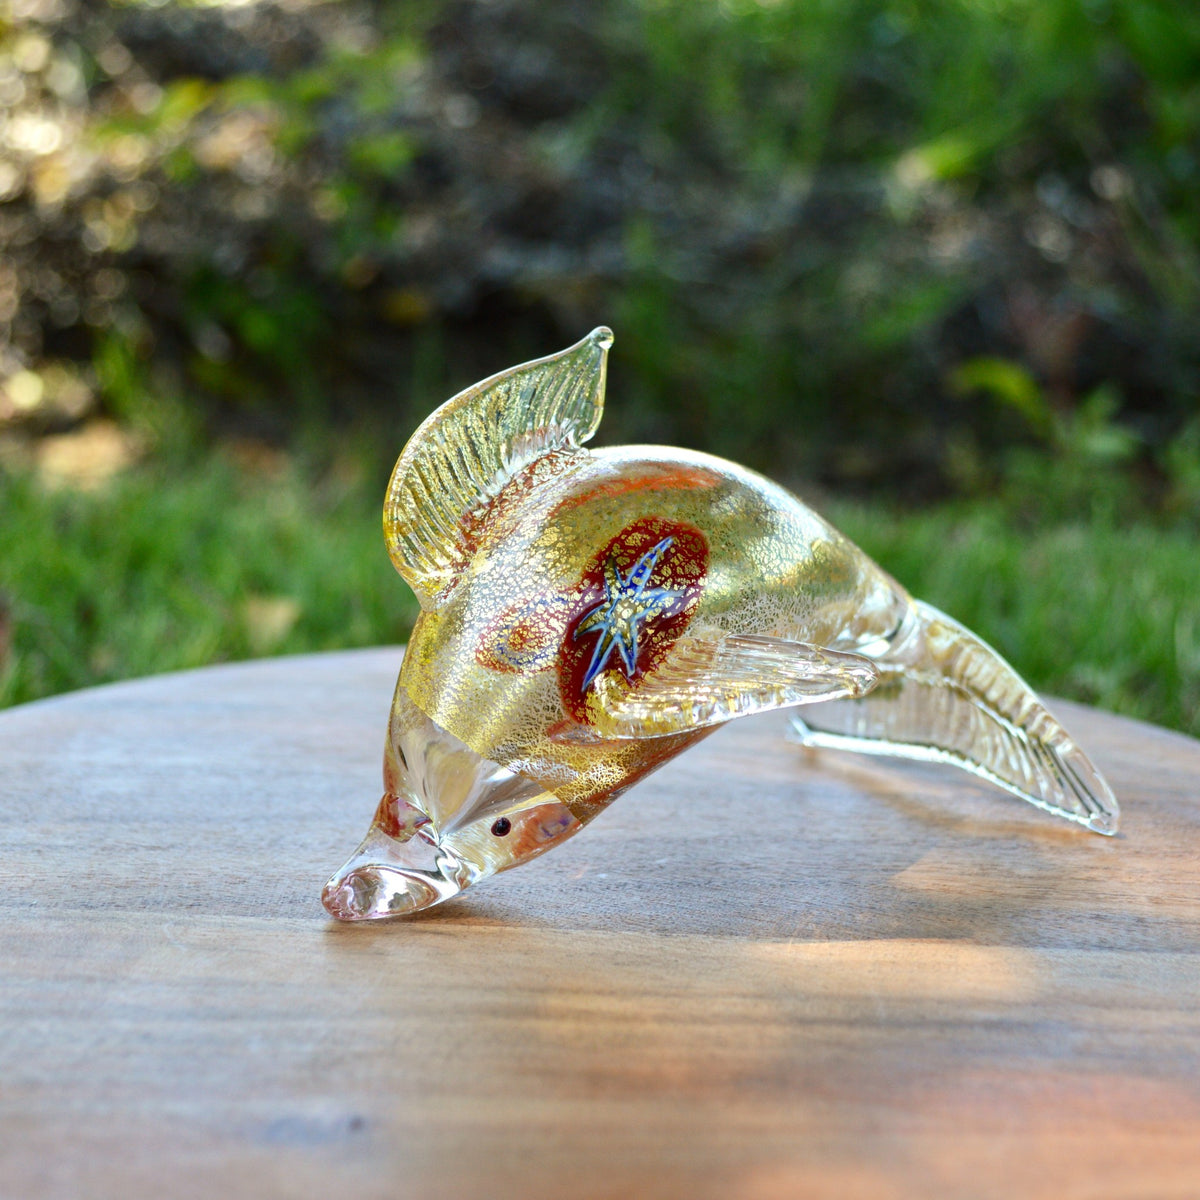 Murano Glass Dolphin, Decorative Figurine, Made in Italy - My Italian Decor